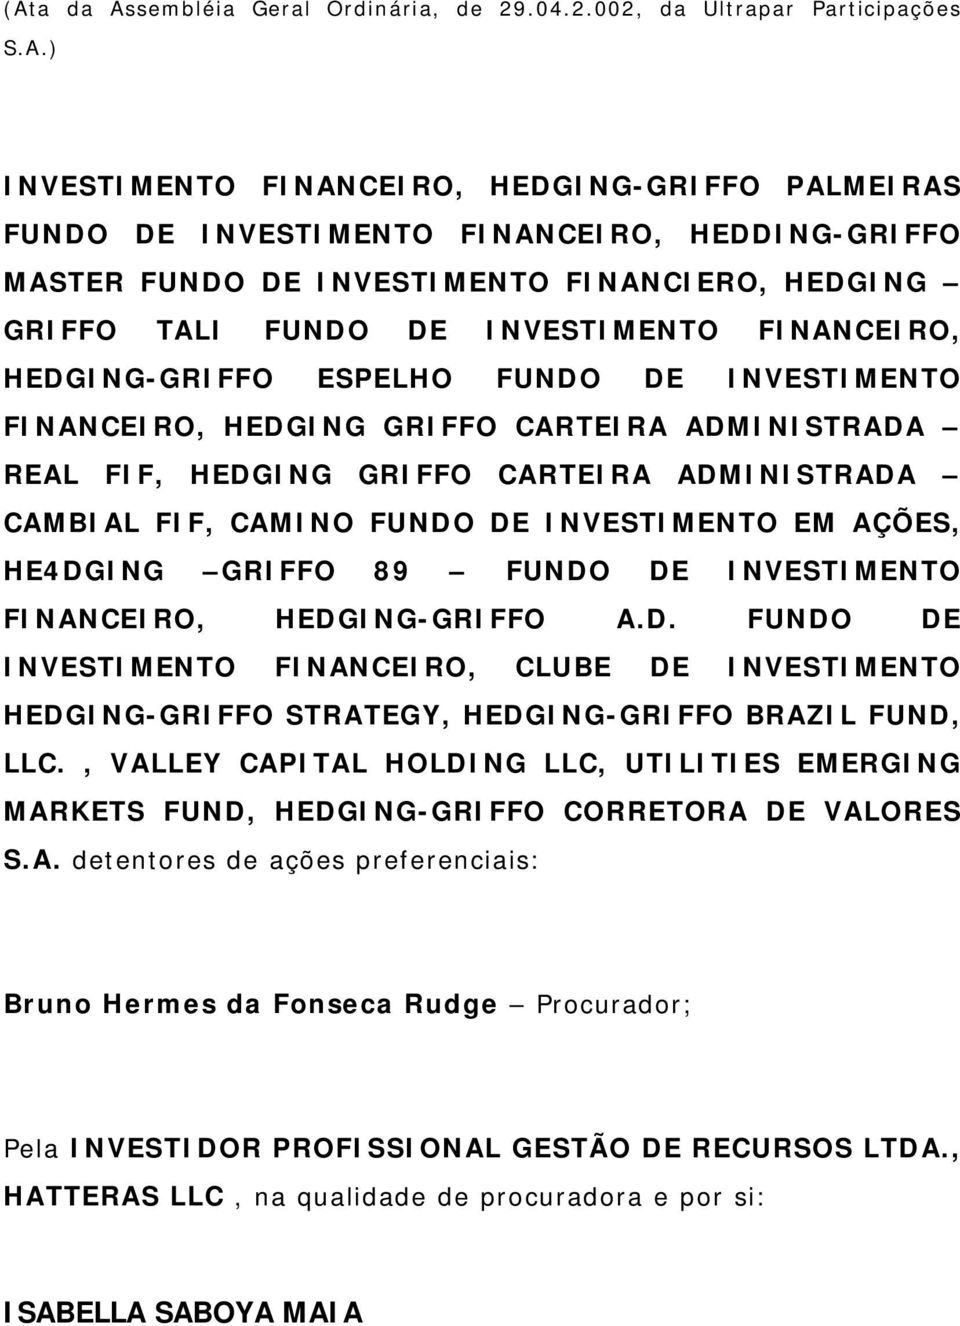 HE4DGING GRIFFO 89 FUNDO DE INVESTIMENTO FINANCEIRO, HEDGING-GRIFFO A.D. FUNDO DE INVESTIMENTO FINANCEIRO, CLUBE DE INVESTIMENTO HEDGING-GRIFFO STRATEGY, HEDGING-GRIFFO BRAZIL FUND, LLC.